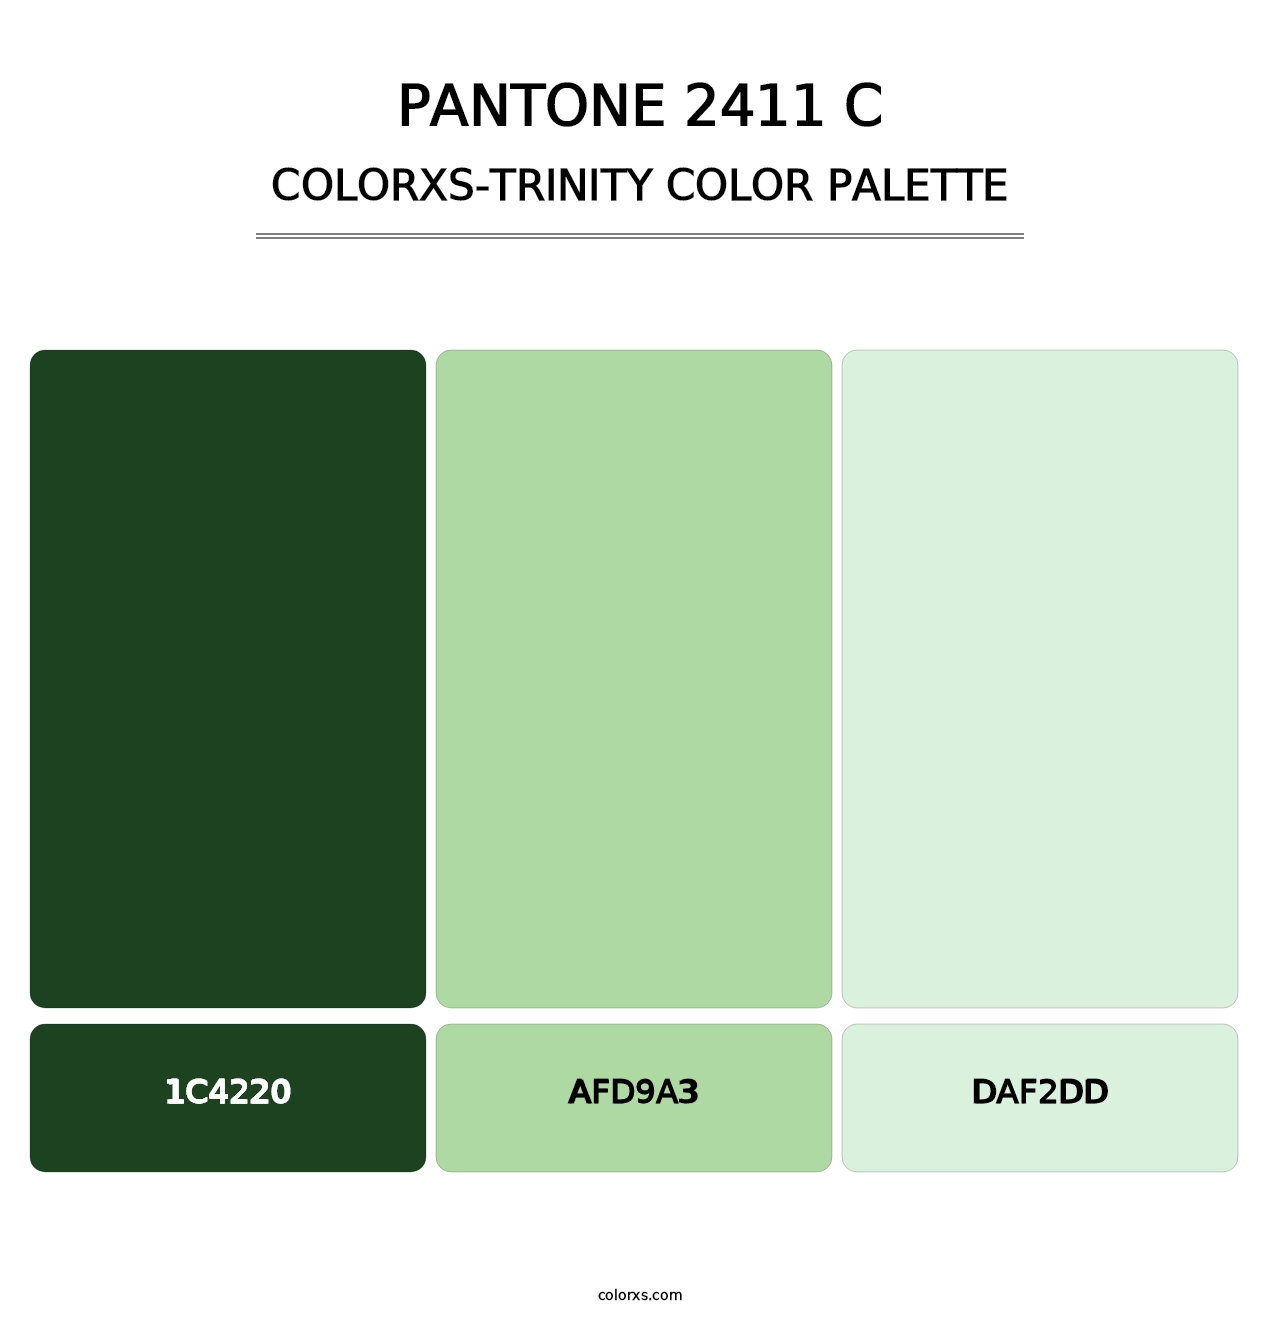 PANTONE 2411 C - Colorxs Trinity Palette